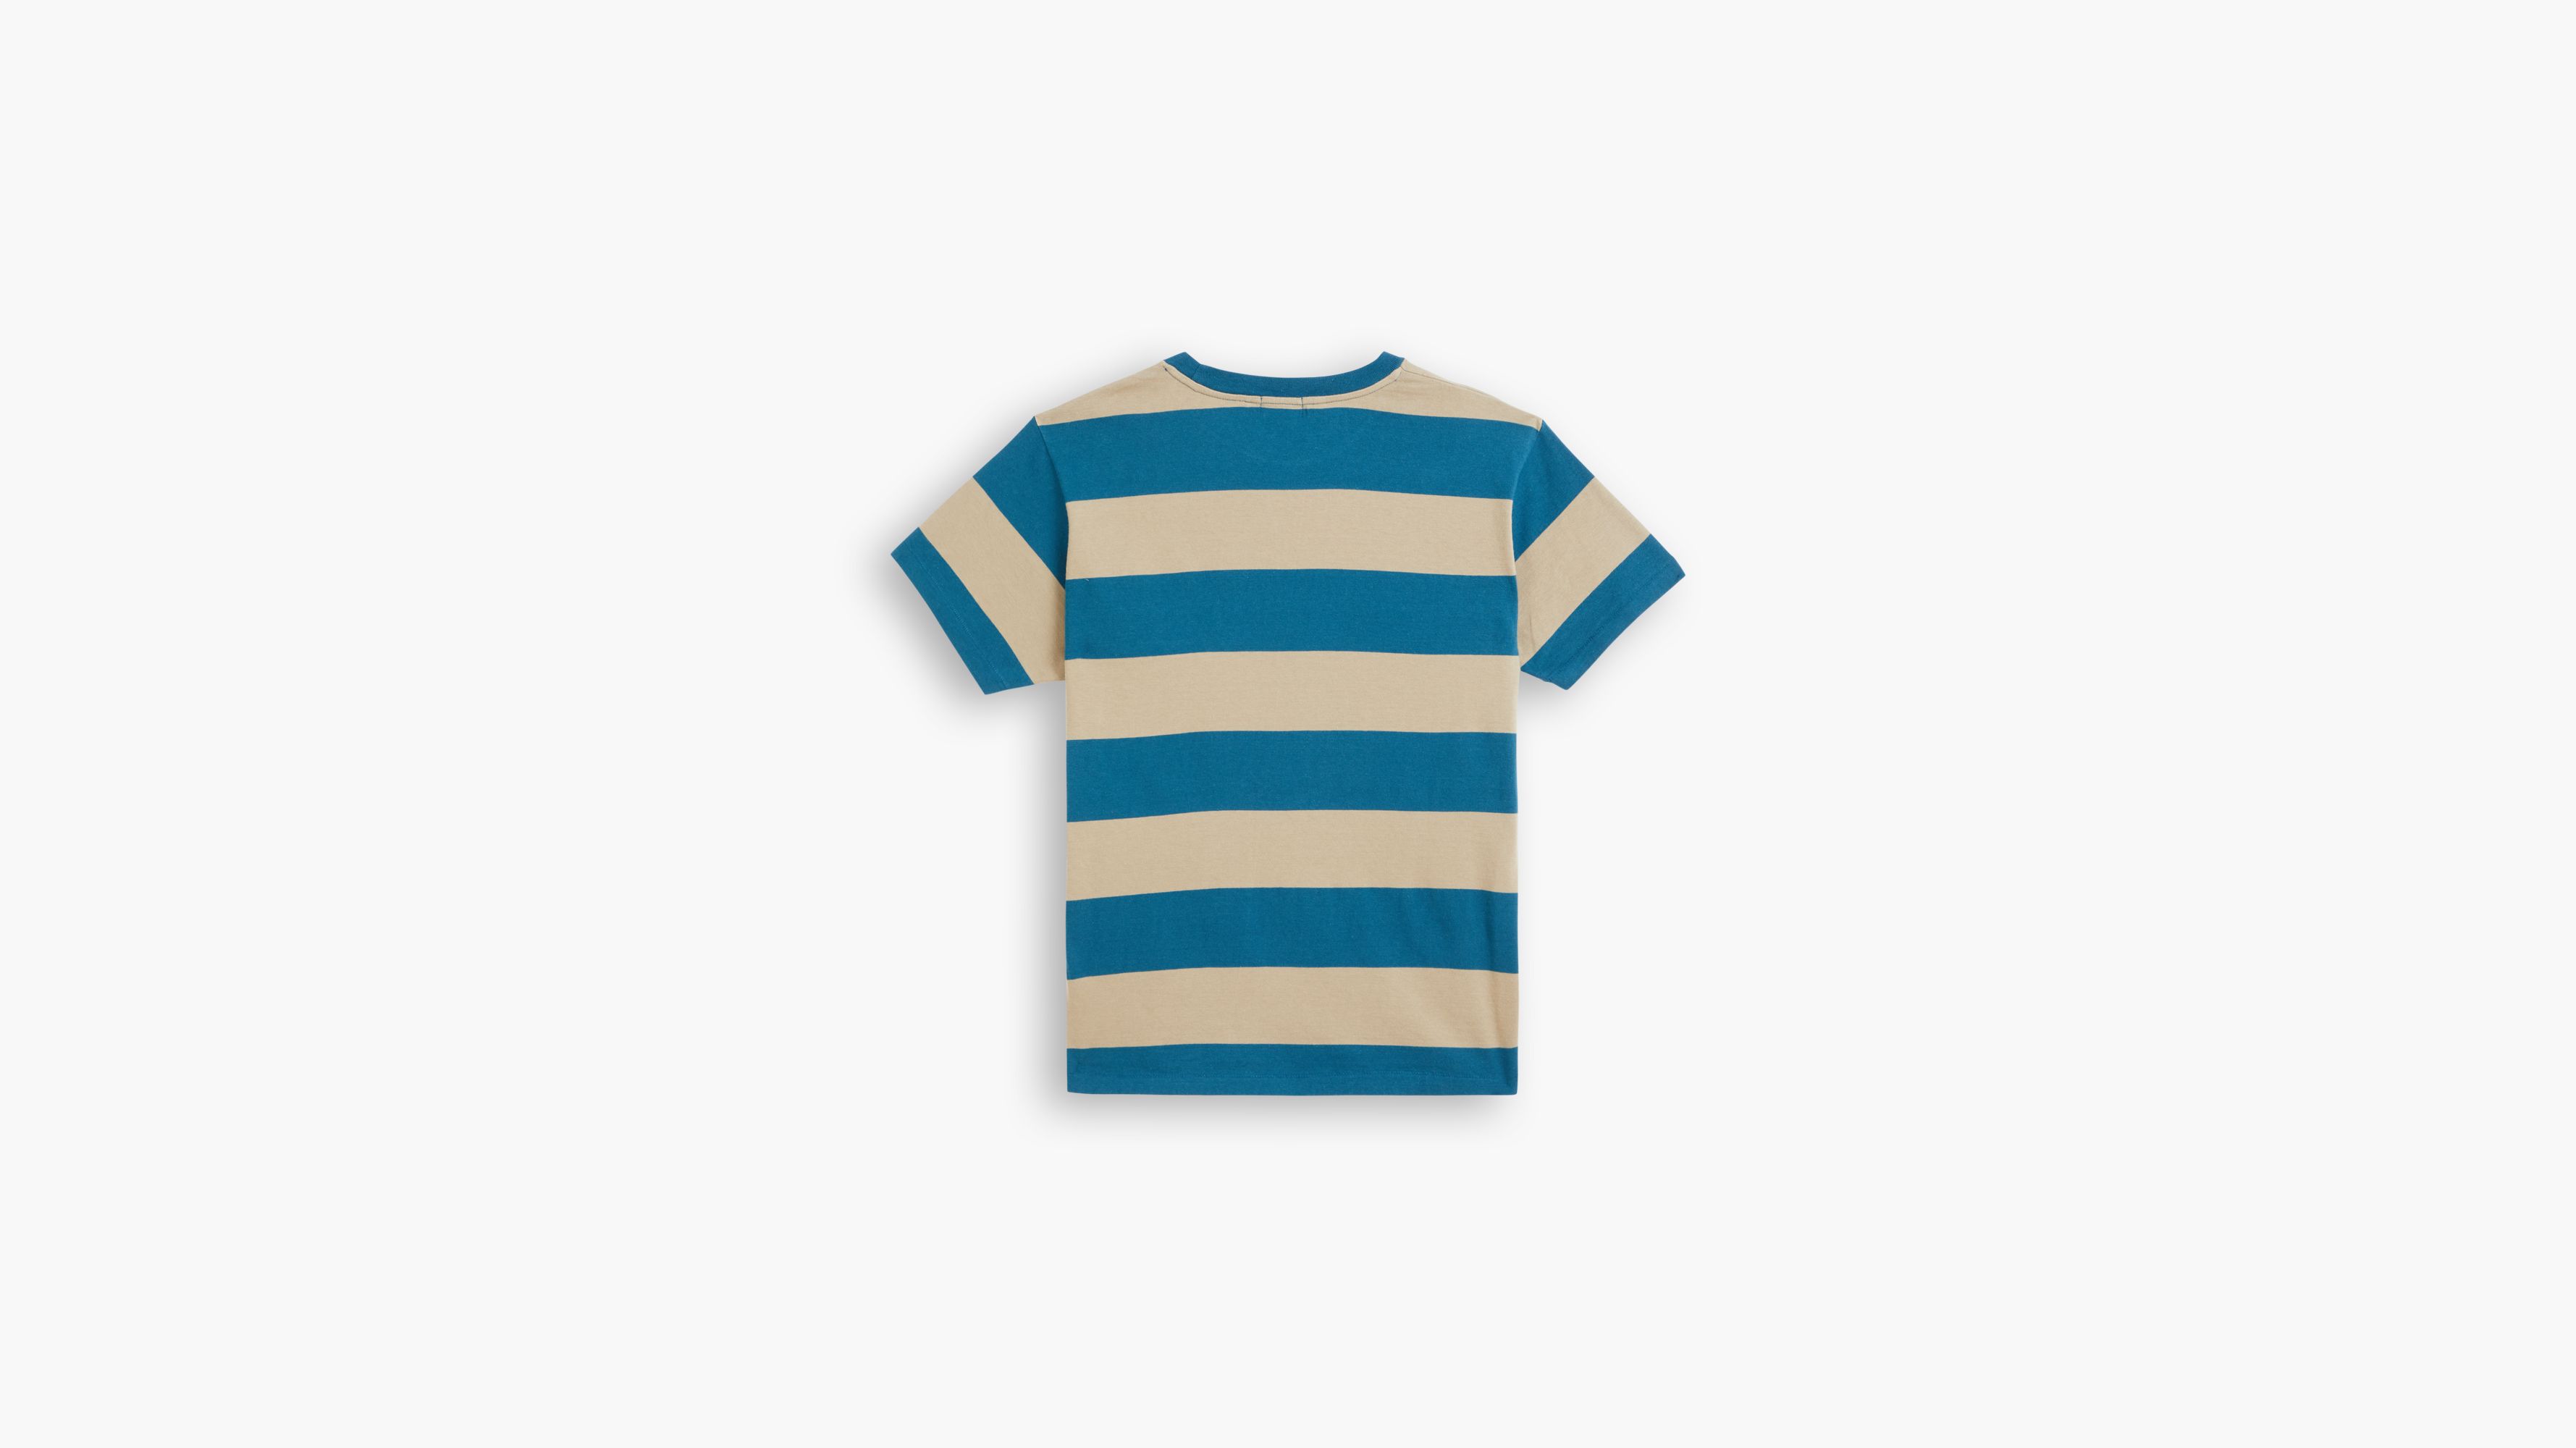 Levi's 1940's Split Hem T-Shirt - Men's - Stripe Brown/Yellow XL